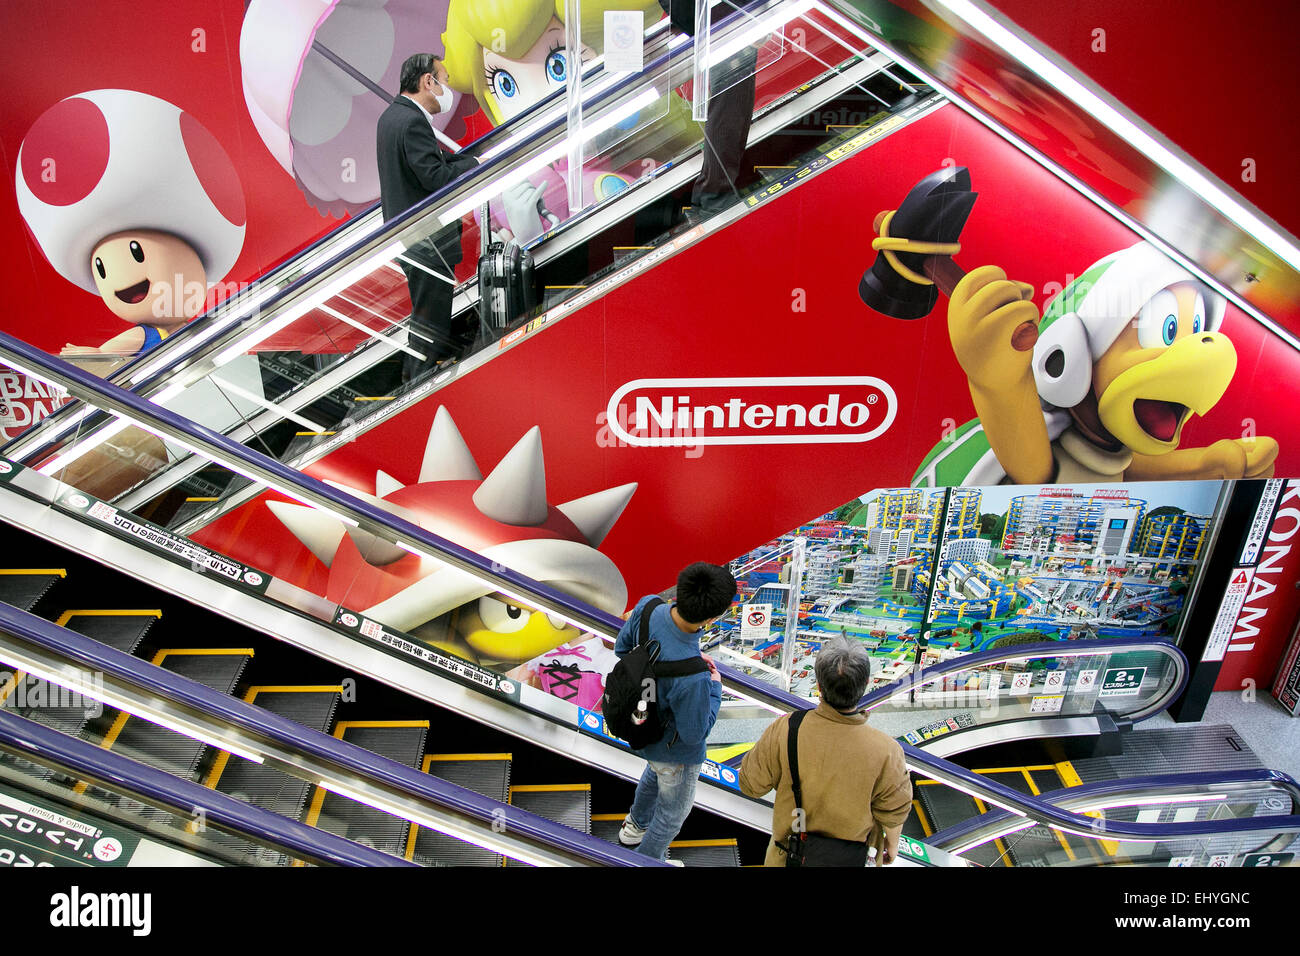 Компания nintendo. Nintendo компания. Японская компания Nintendo. Офис Nintendo в Японии. Nintendo of America проекты.